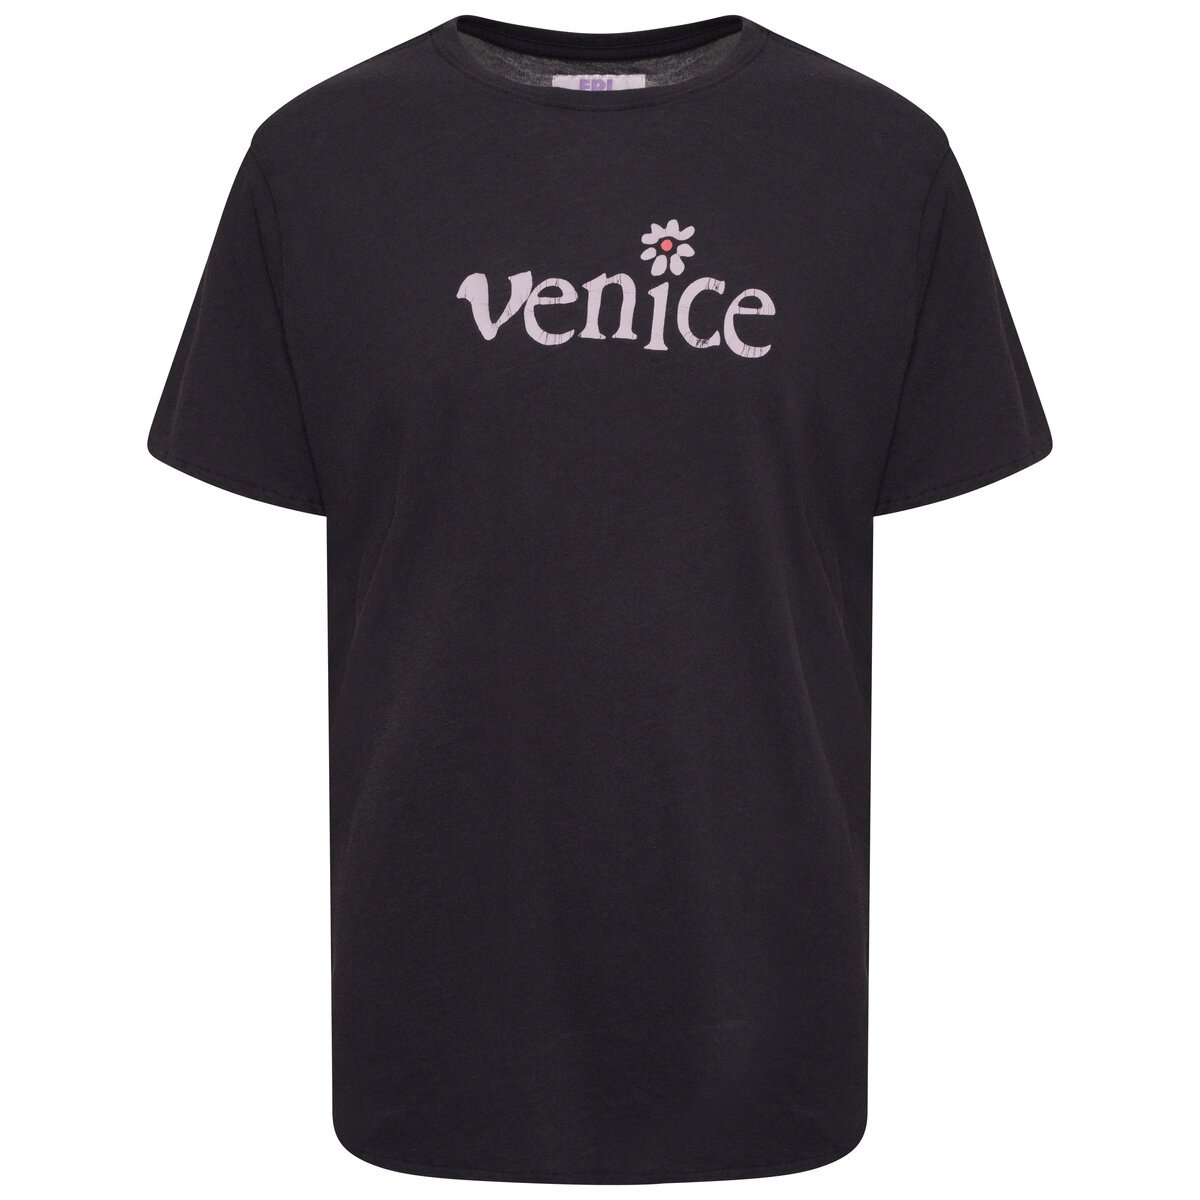 Venice - Be Nice T-shirt S Black